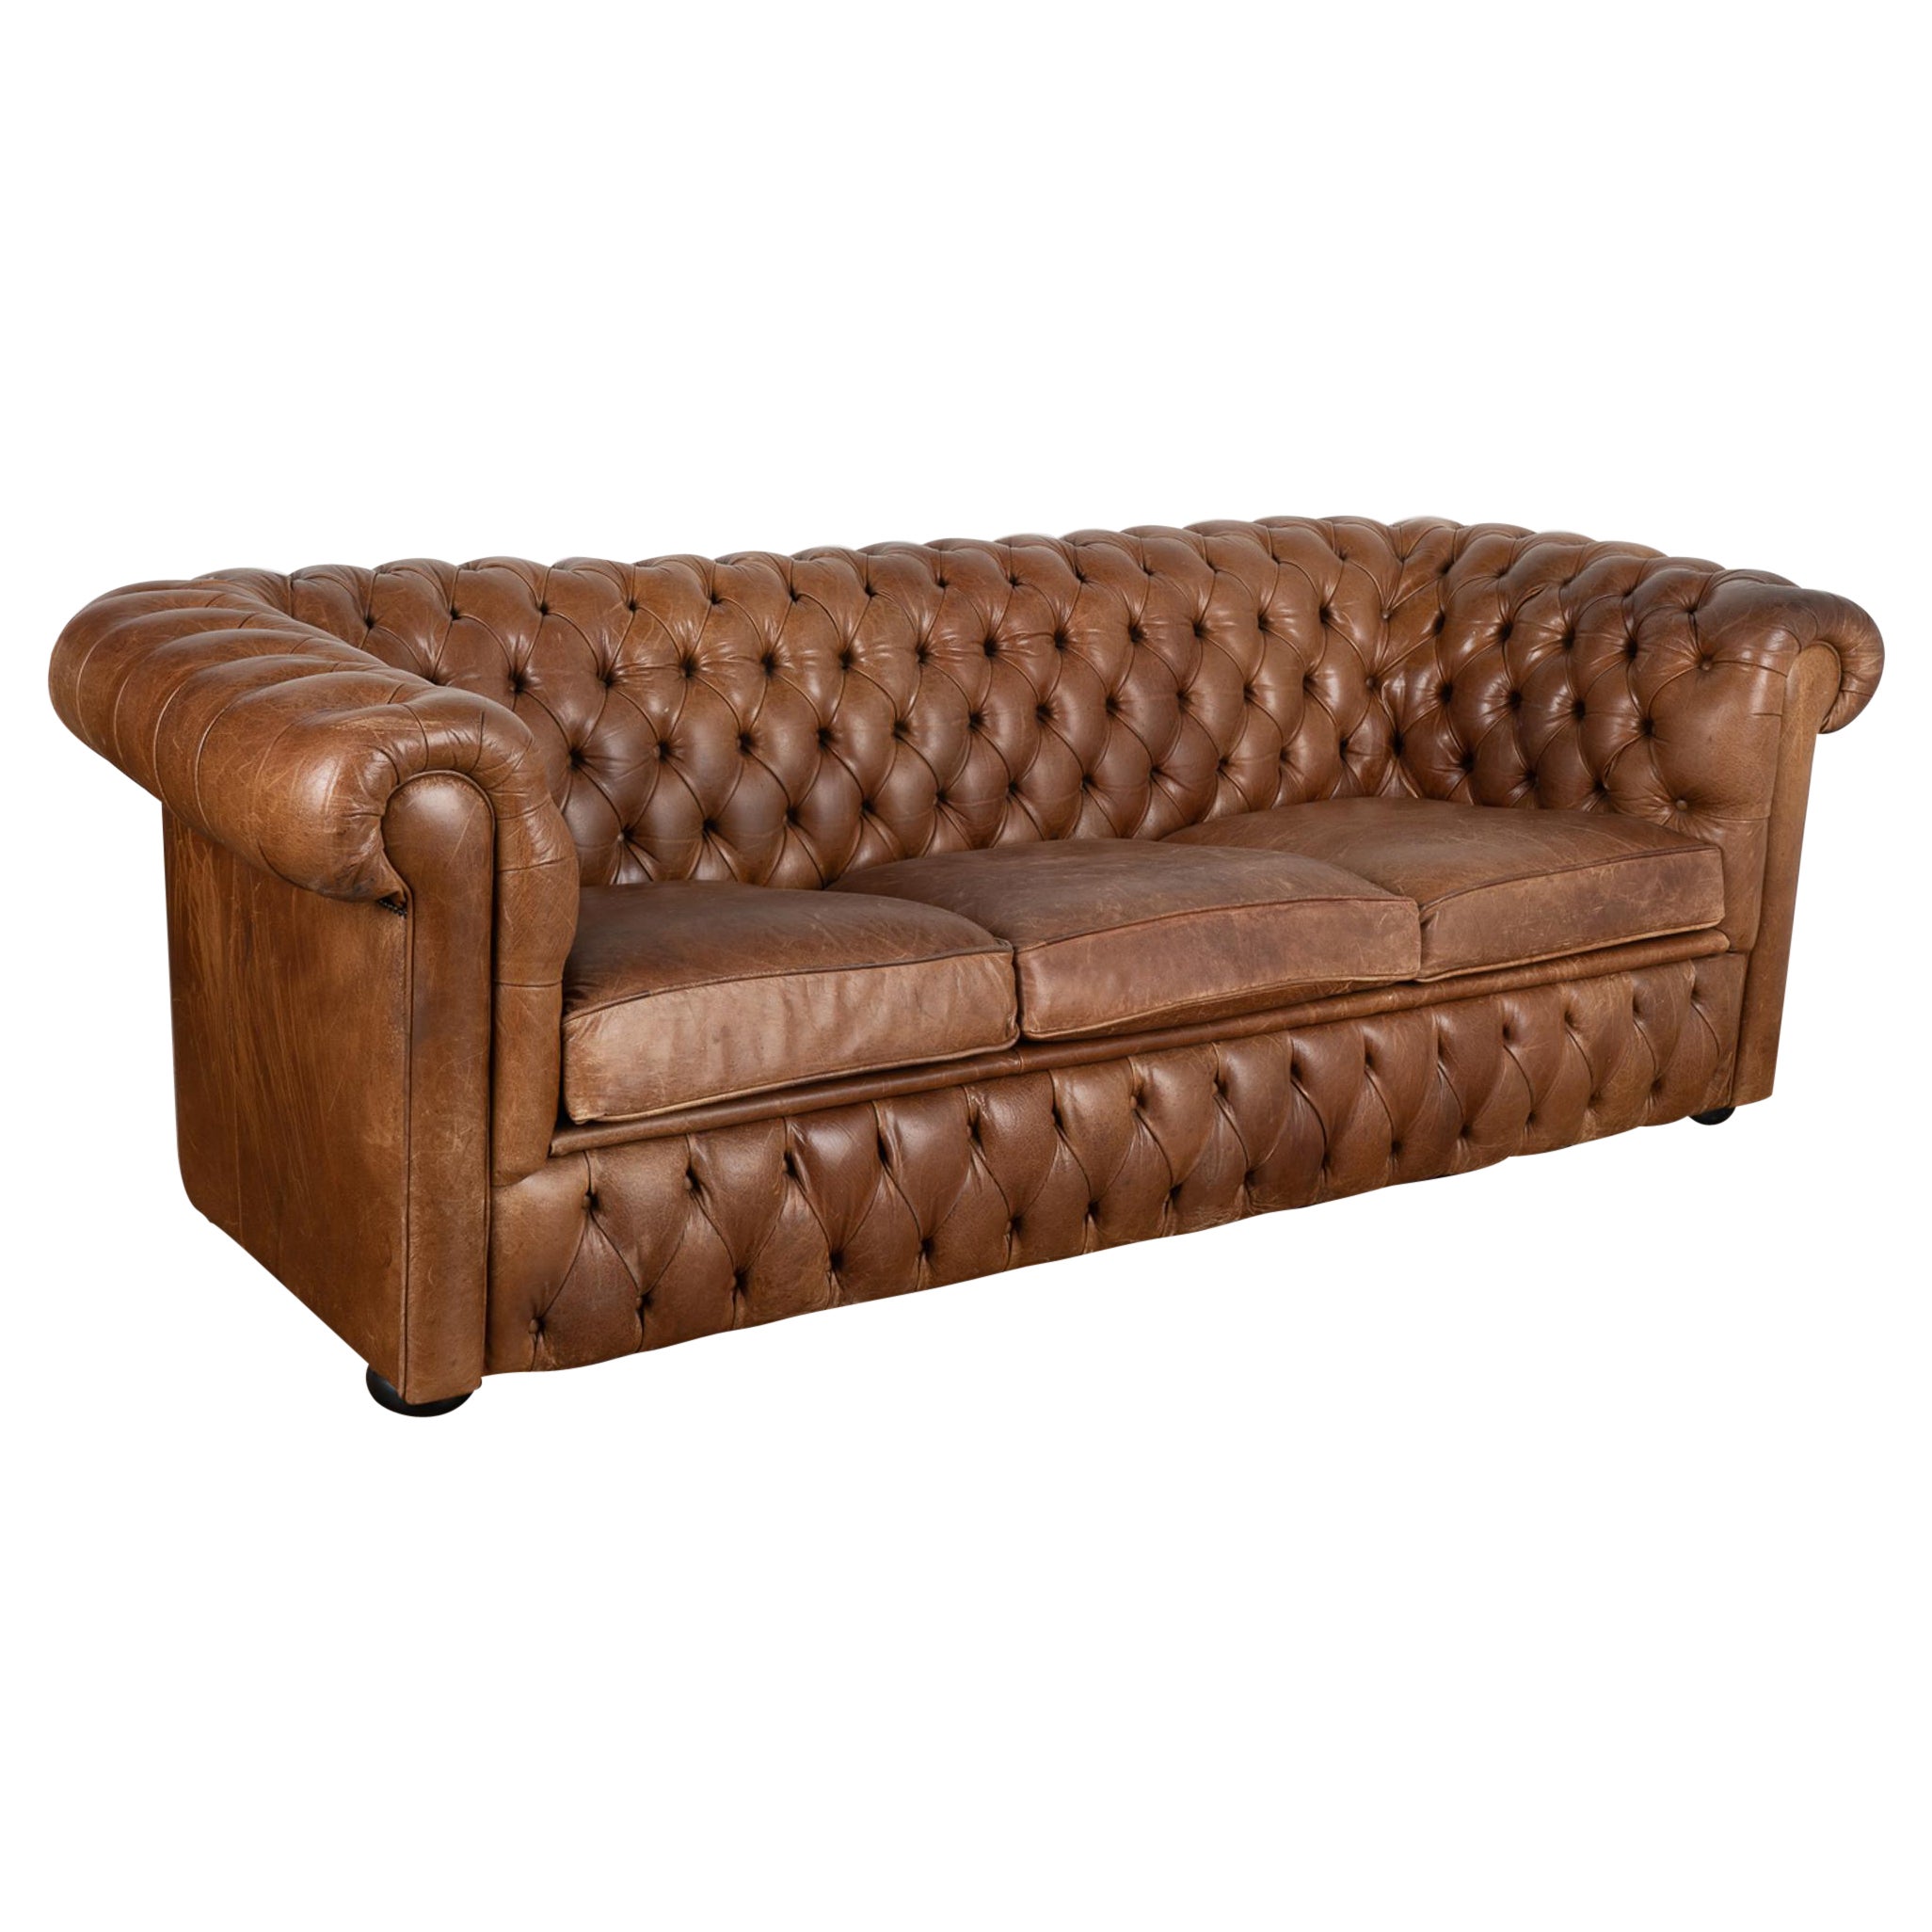 Vintage Brown Leather Three Seat Chesterfield Sofa, Dänemark ca. 1960-70